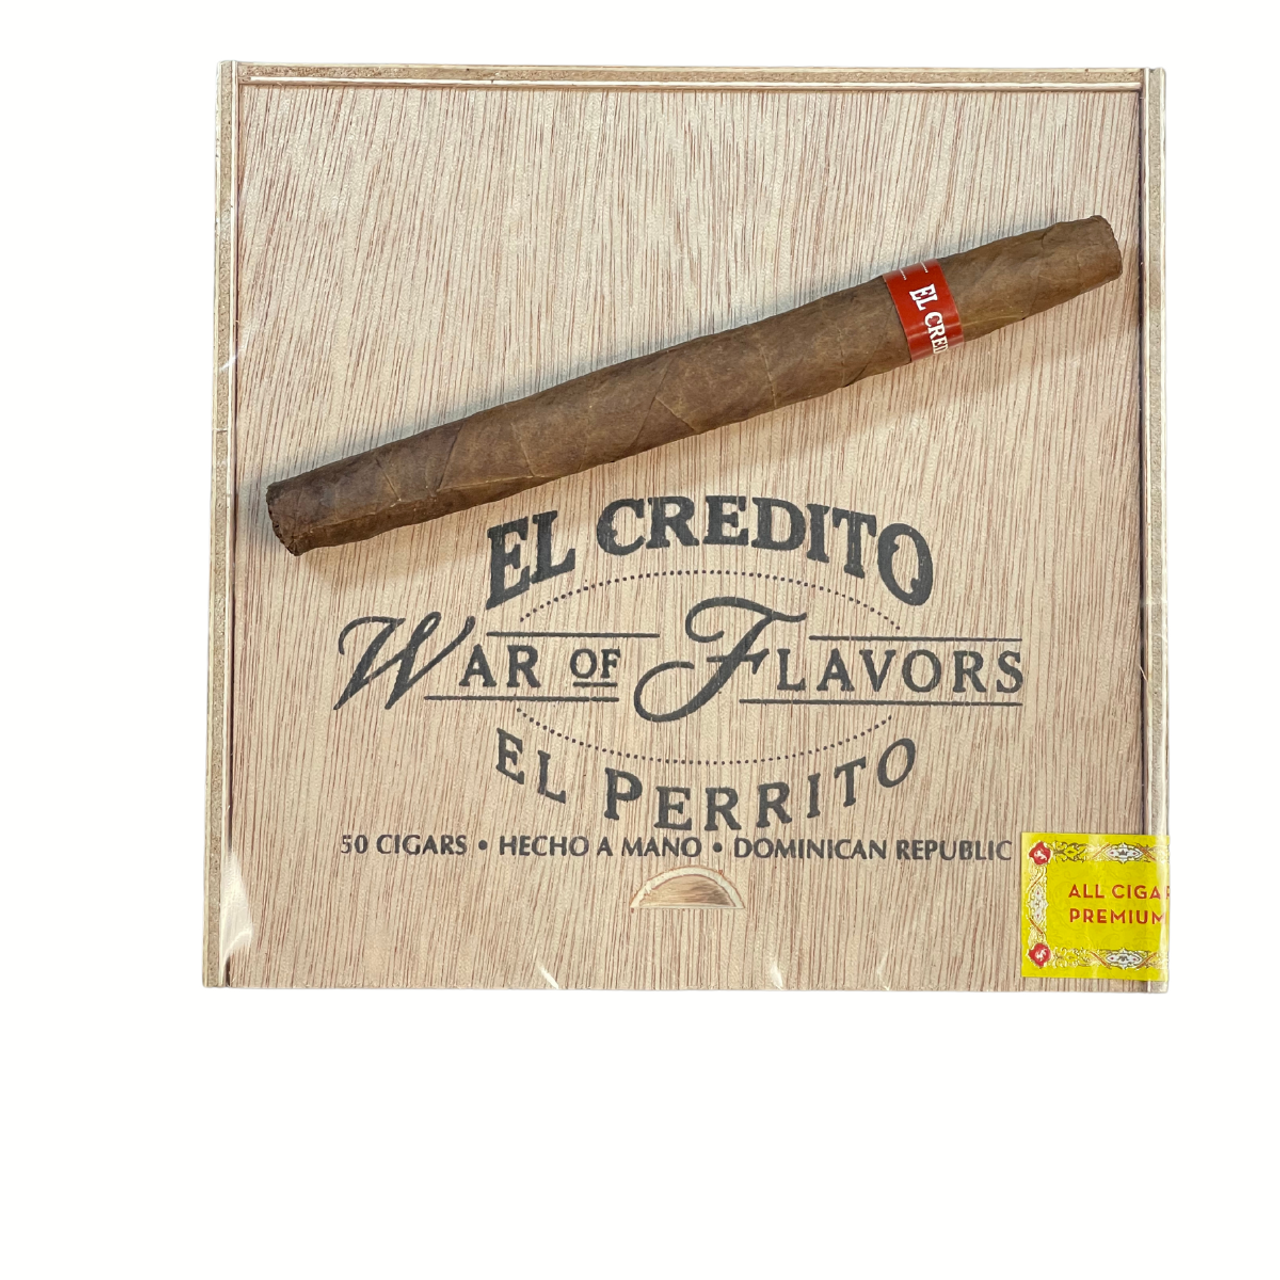 El Credito "El Perrito" War Of Flavors Box of 50 by General Cigar available at cigarsamplers.com with FREE shipping!